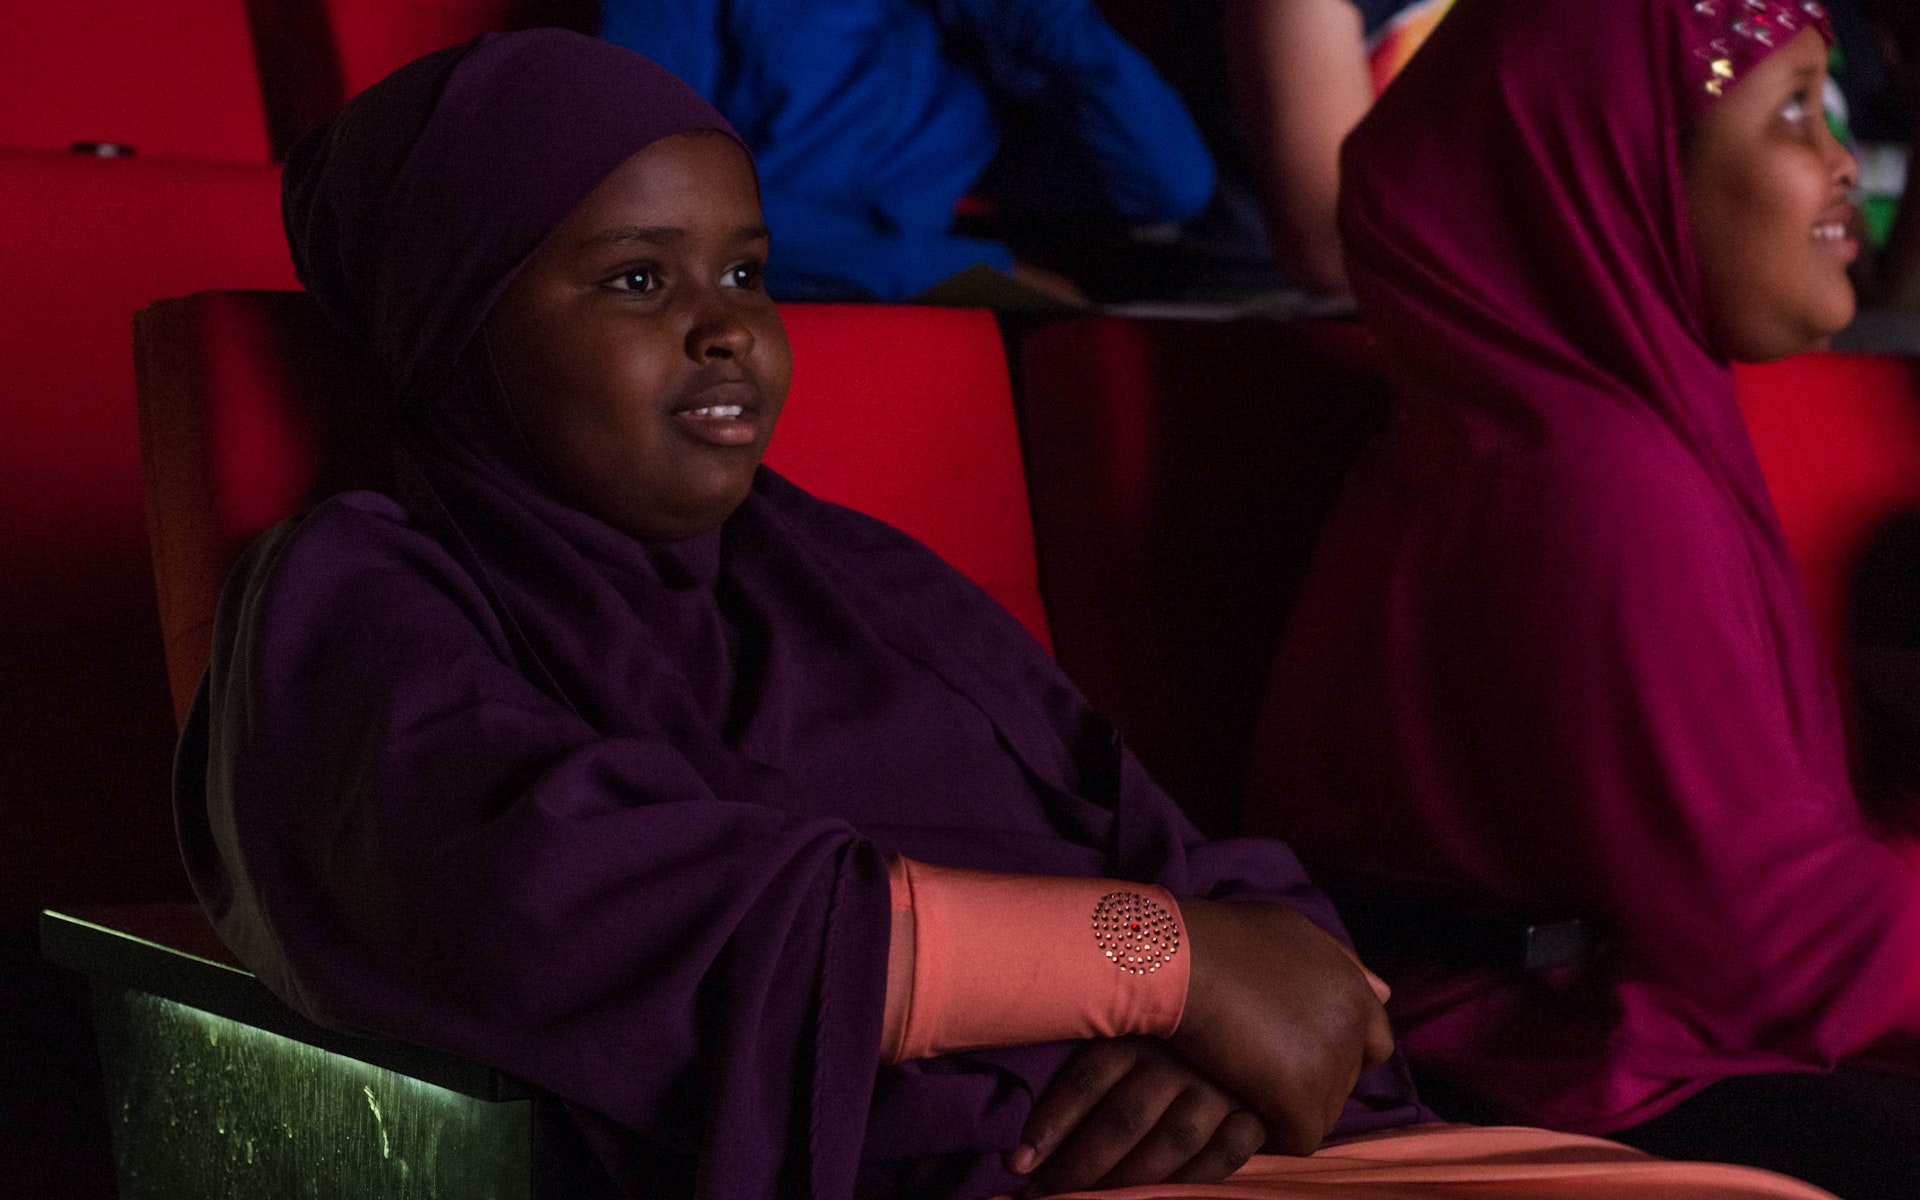 Two children sit in cinema seats watching films